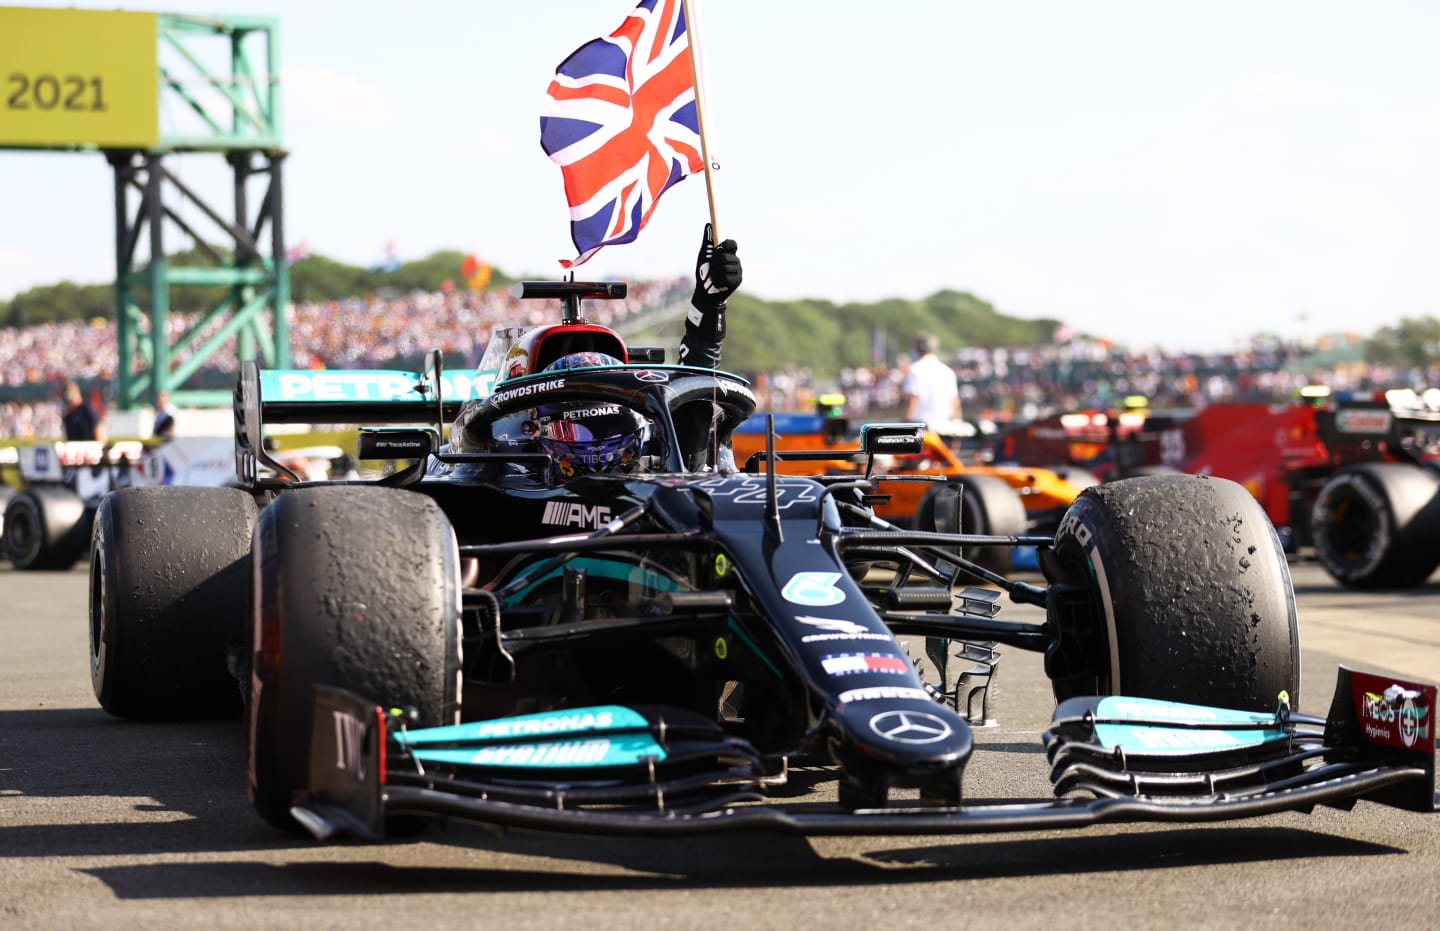 NORTHAMPTON, ENGLAND - JULY 18: Race winner Lewis Hamilton of Great Britain and Mercedes GP